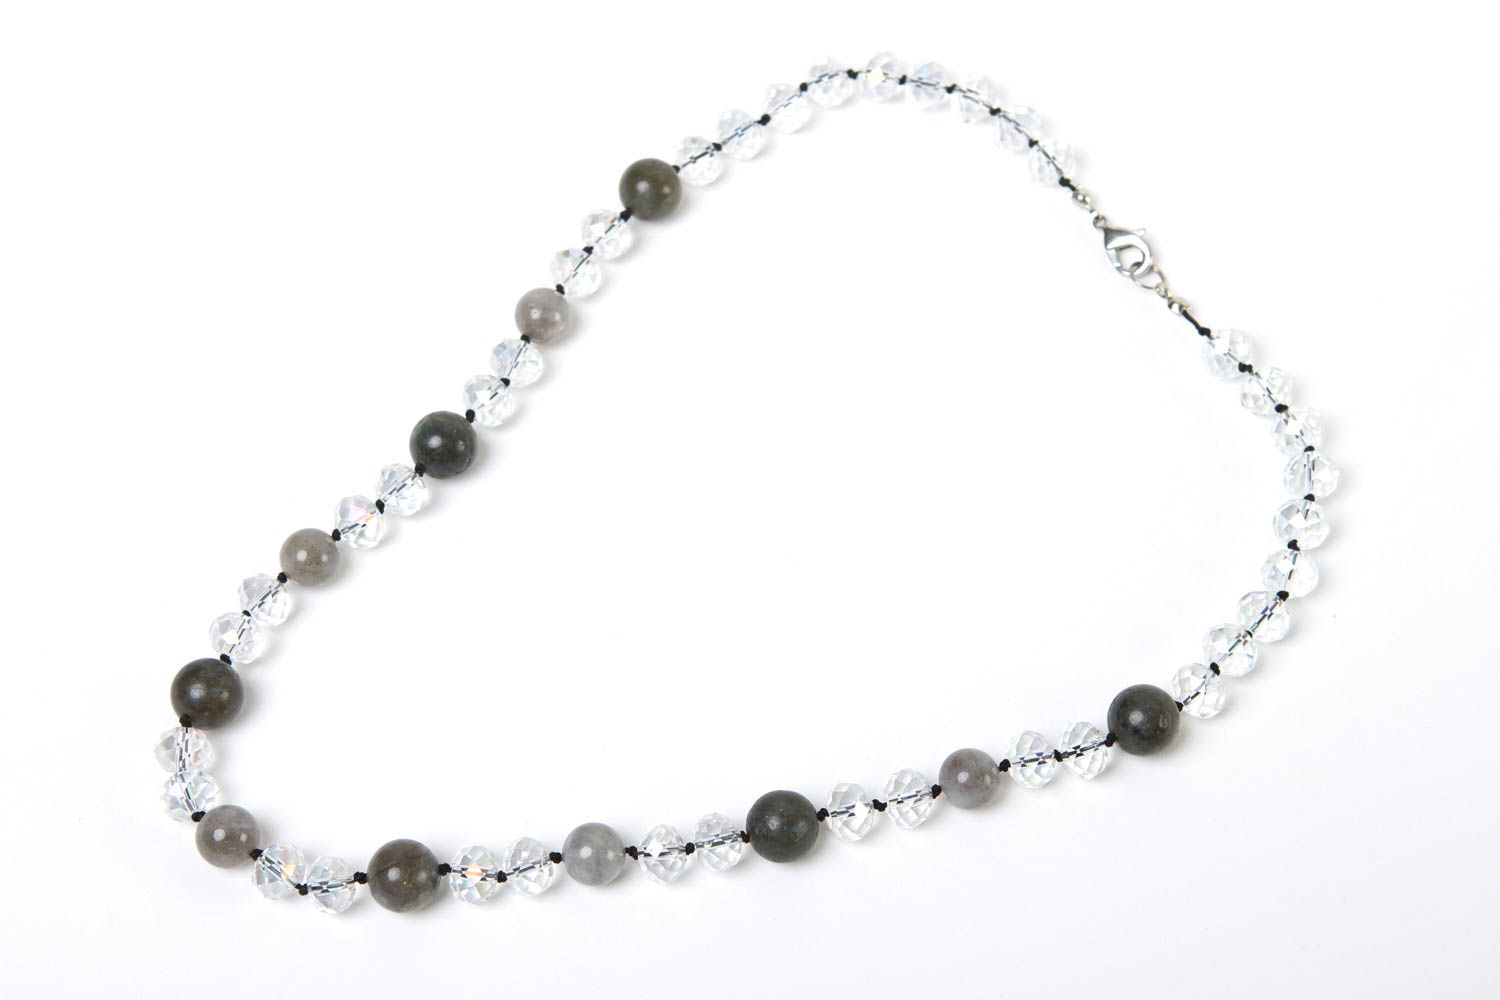 Handmade necklace designer accessory gift ideas unusual bead necklace photo 2